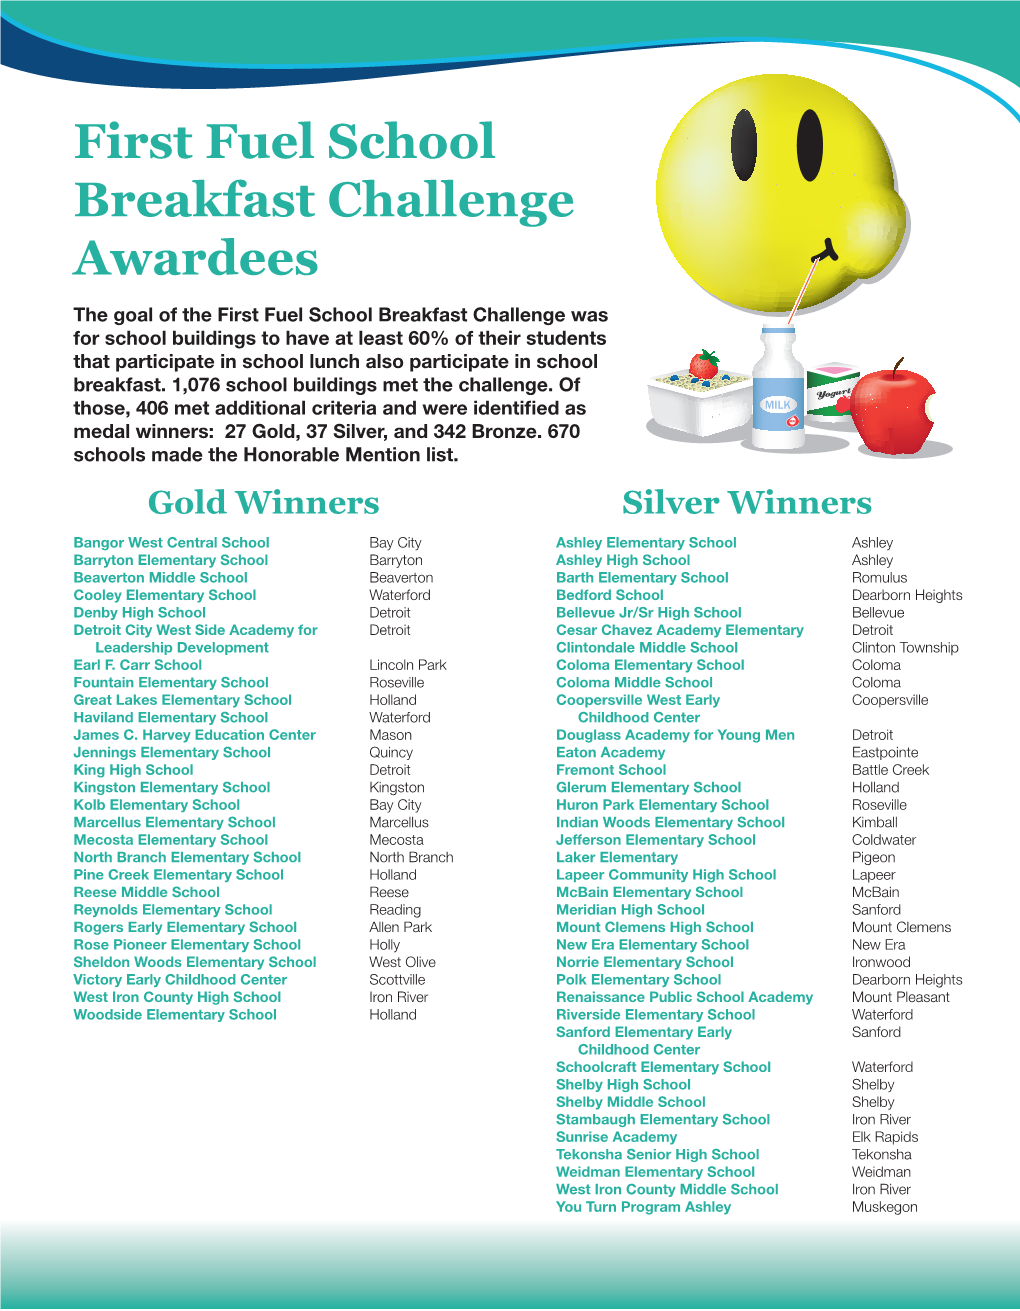 First Fuel School Breakfast Challenge Awardees